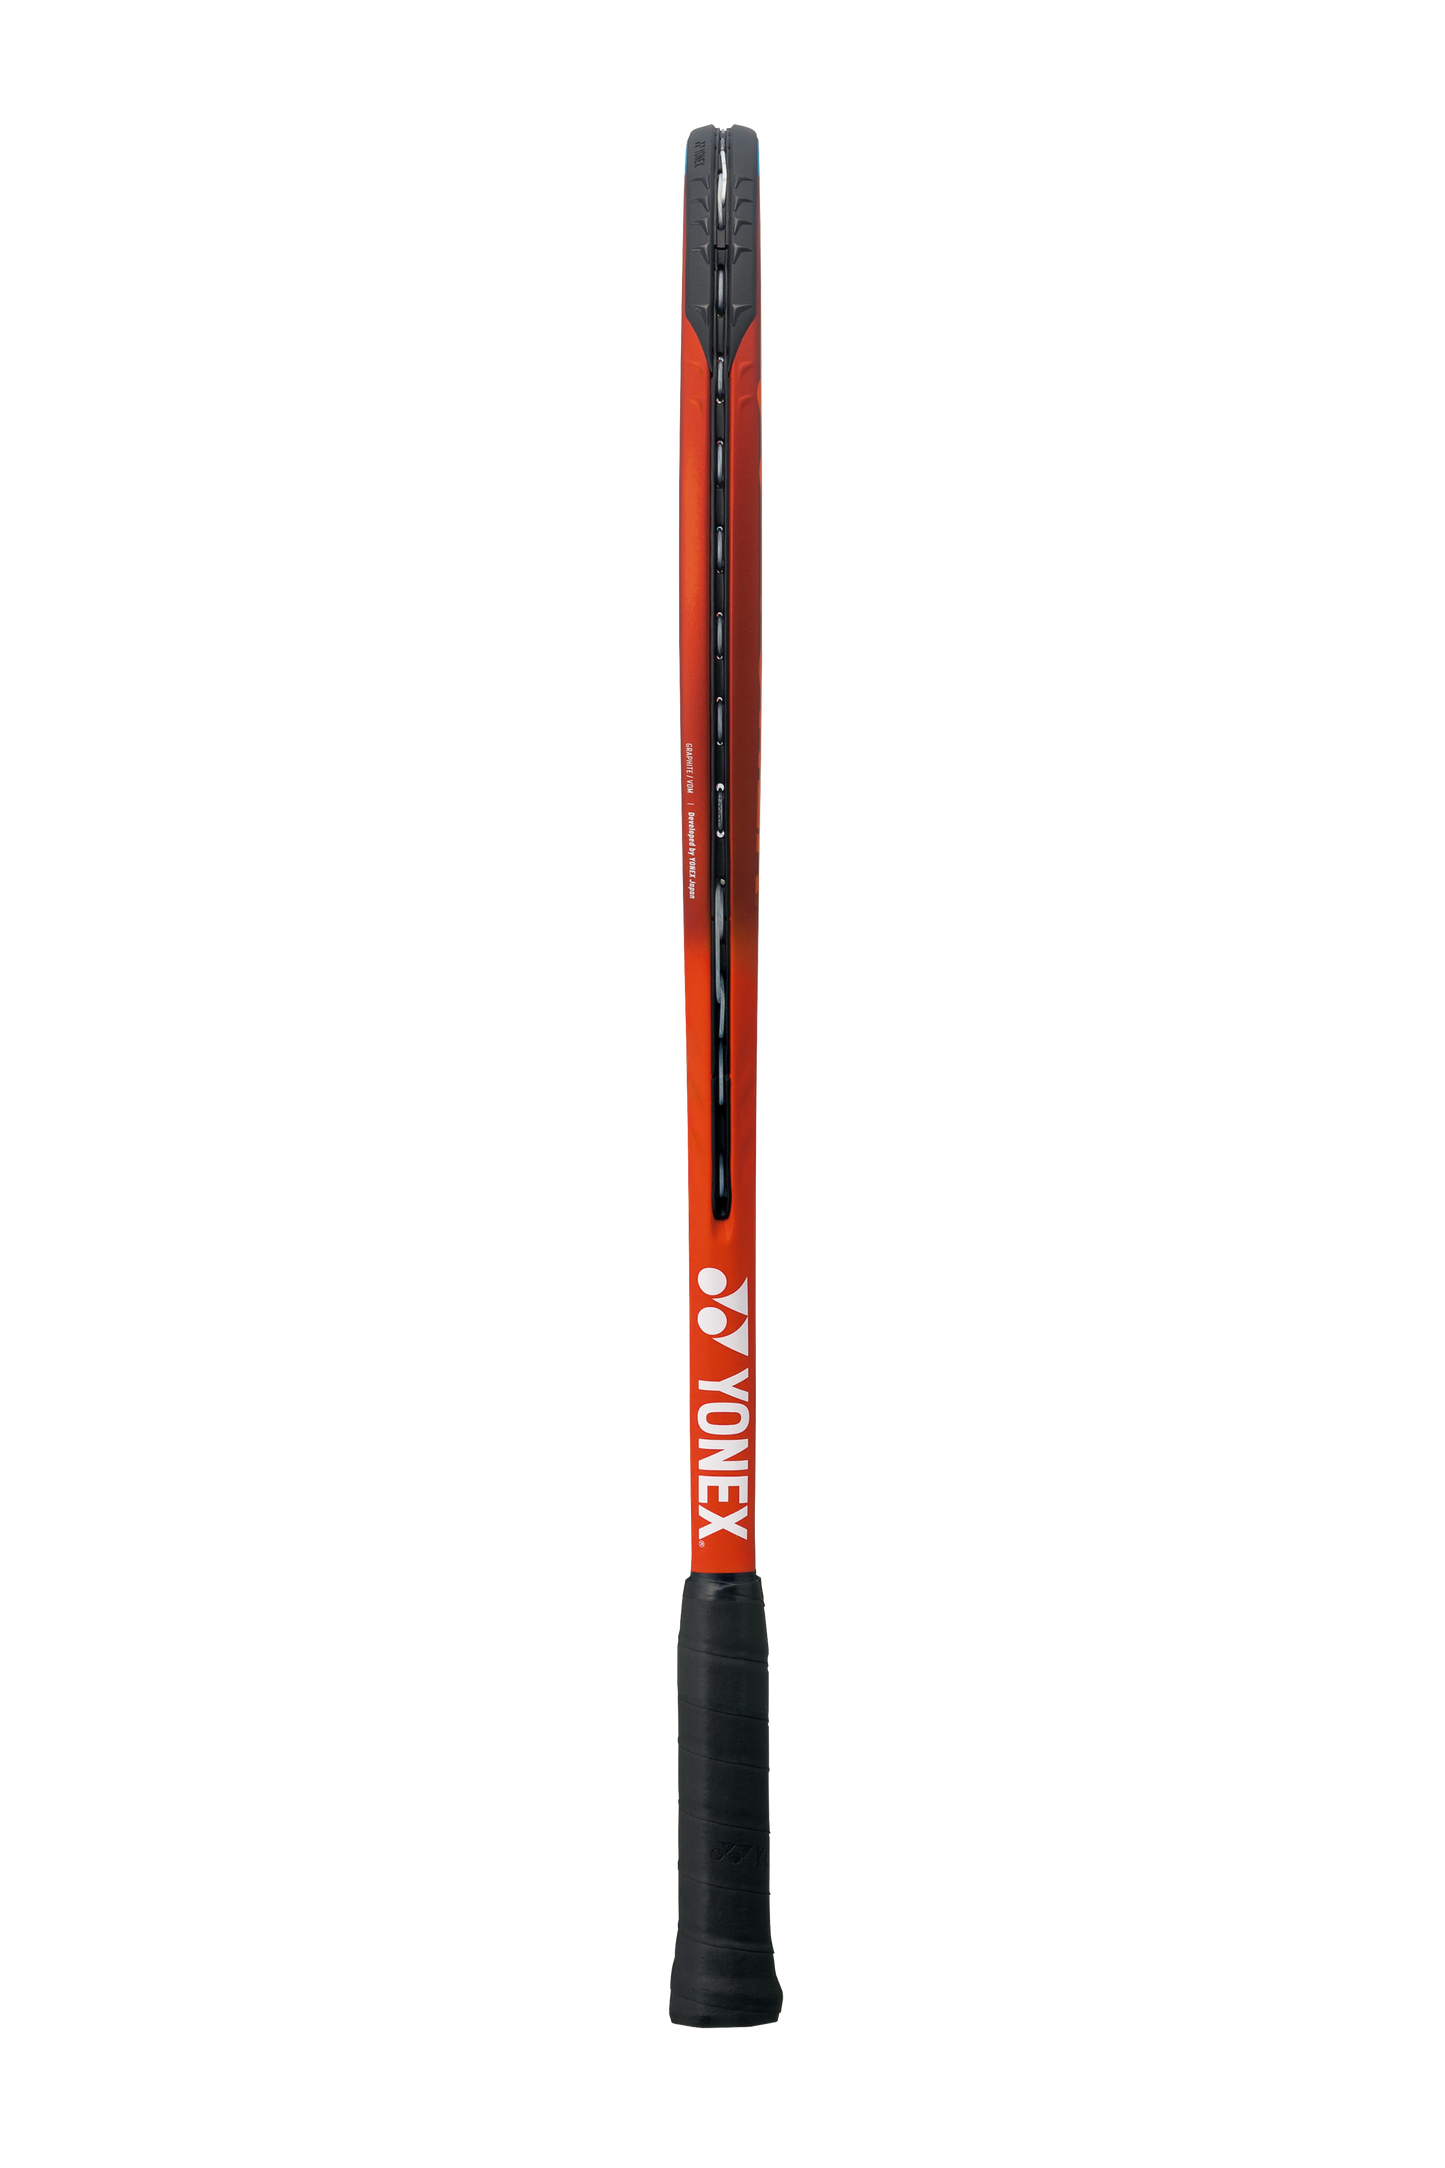 YONEX Junior Tennis Racquet VCORE 25 Strung - Max Sports